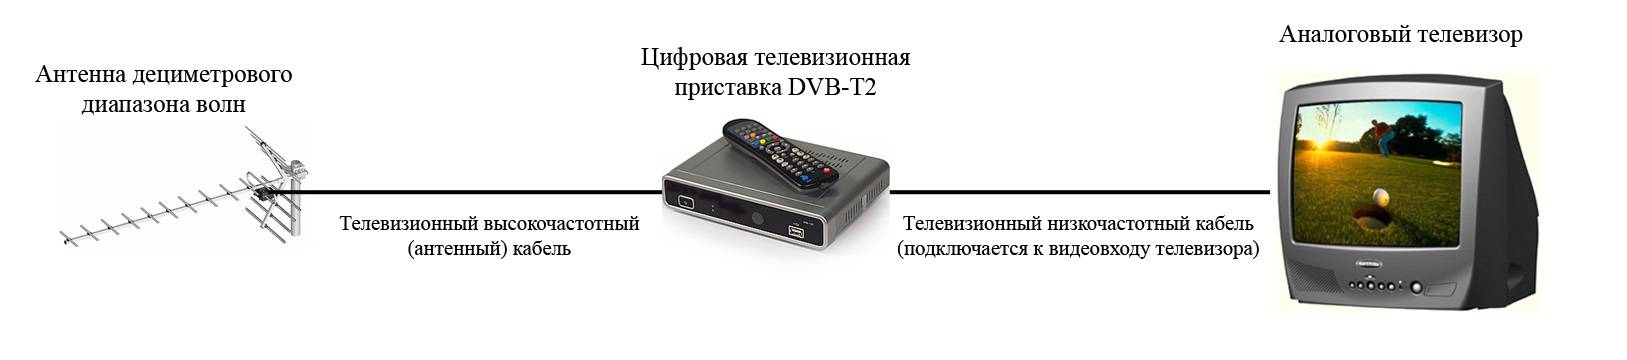 Цифровые каналы на старом телевизоре. ТВ-приставка для цифрового телевидения DVB-t2 схема подключения. DVB-t2 приставка схема подключения. Подключить 2 телевизора к цифровой приставке TVB-C. Как подключить старый телевизор к приставке т2.